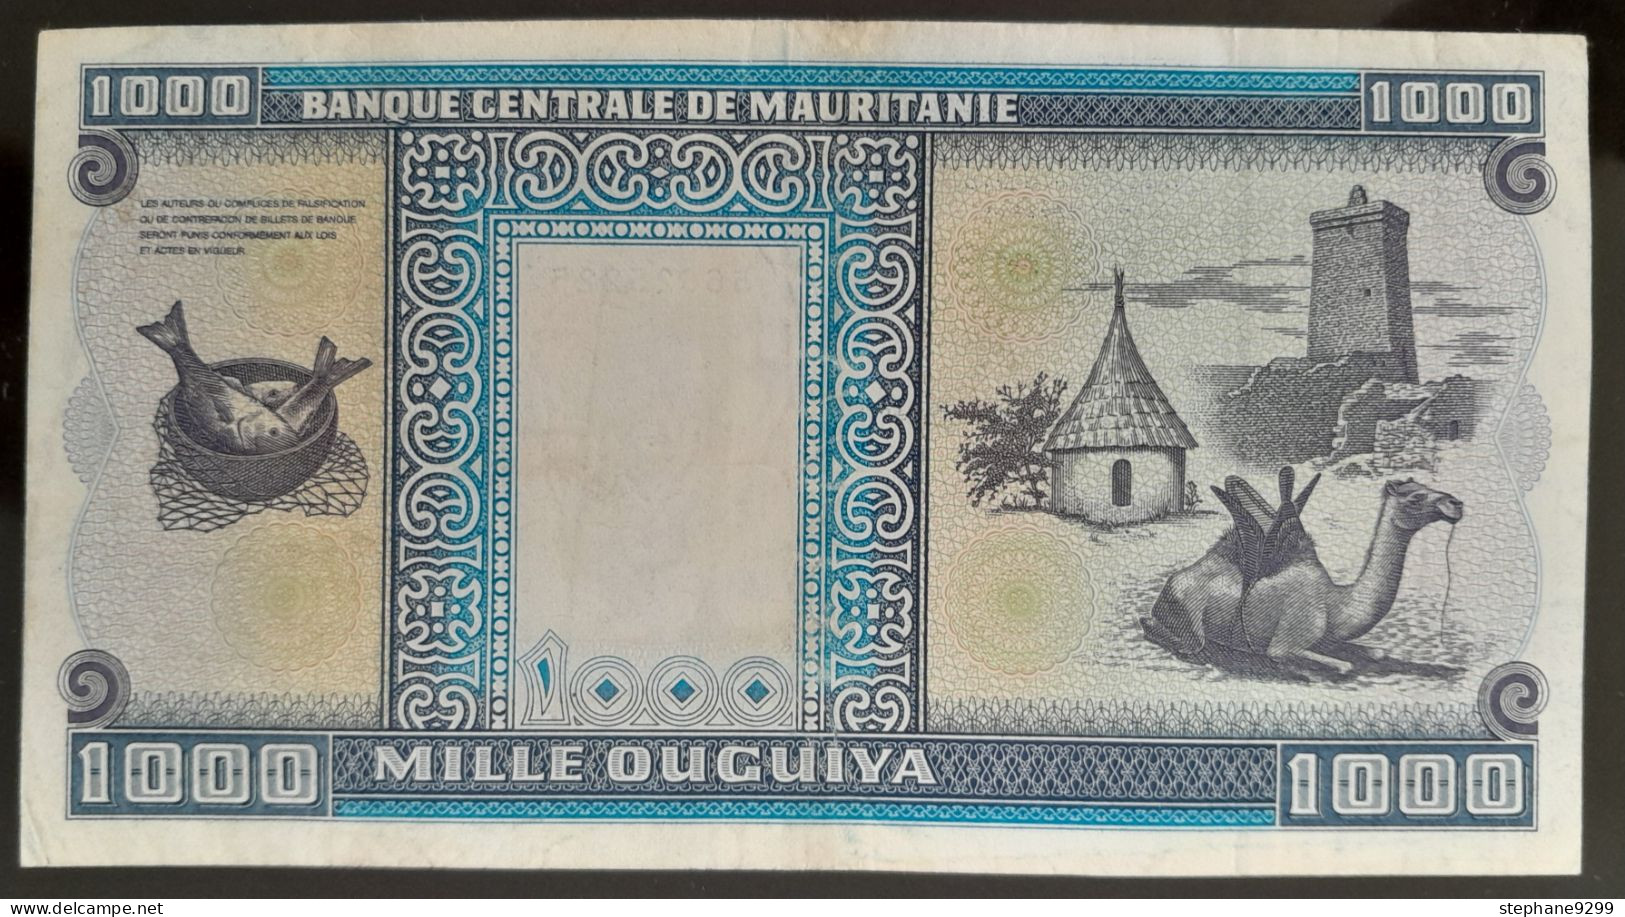 MAURITANIE 1000 OUGUIYA 1993 - Mauritania